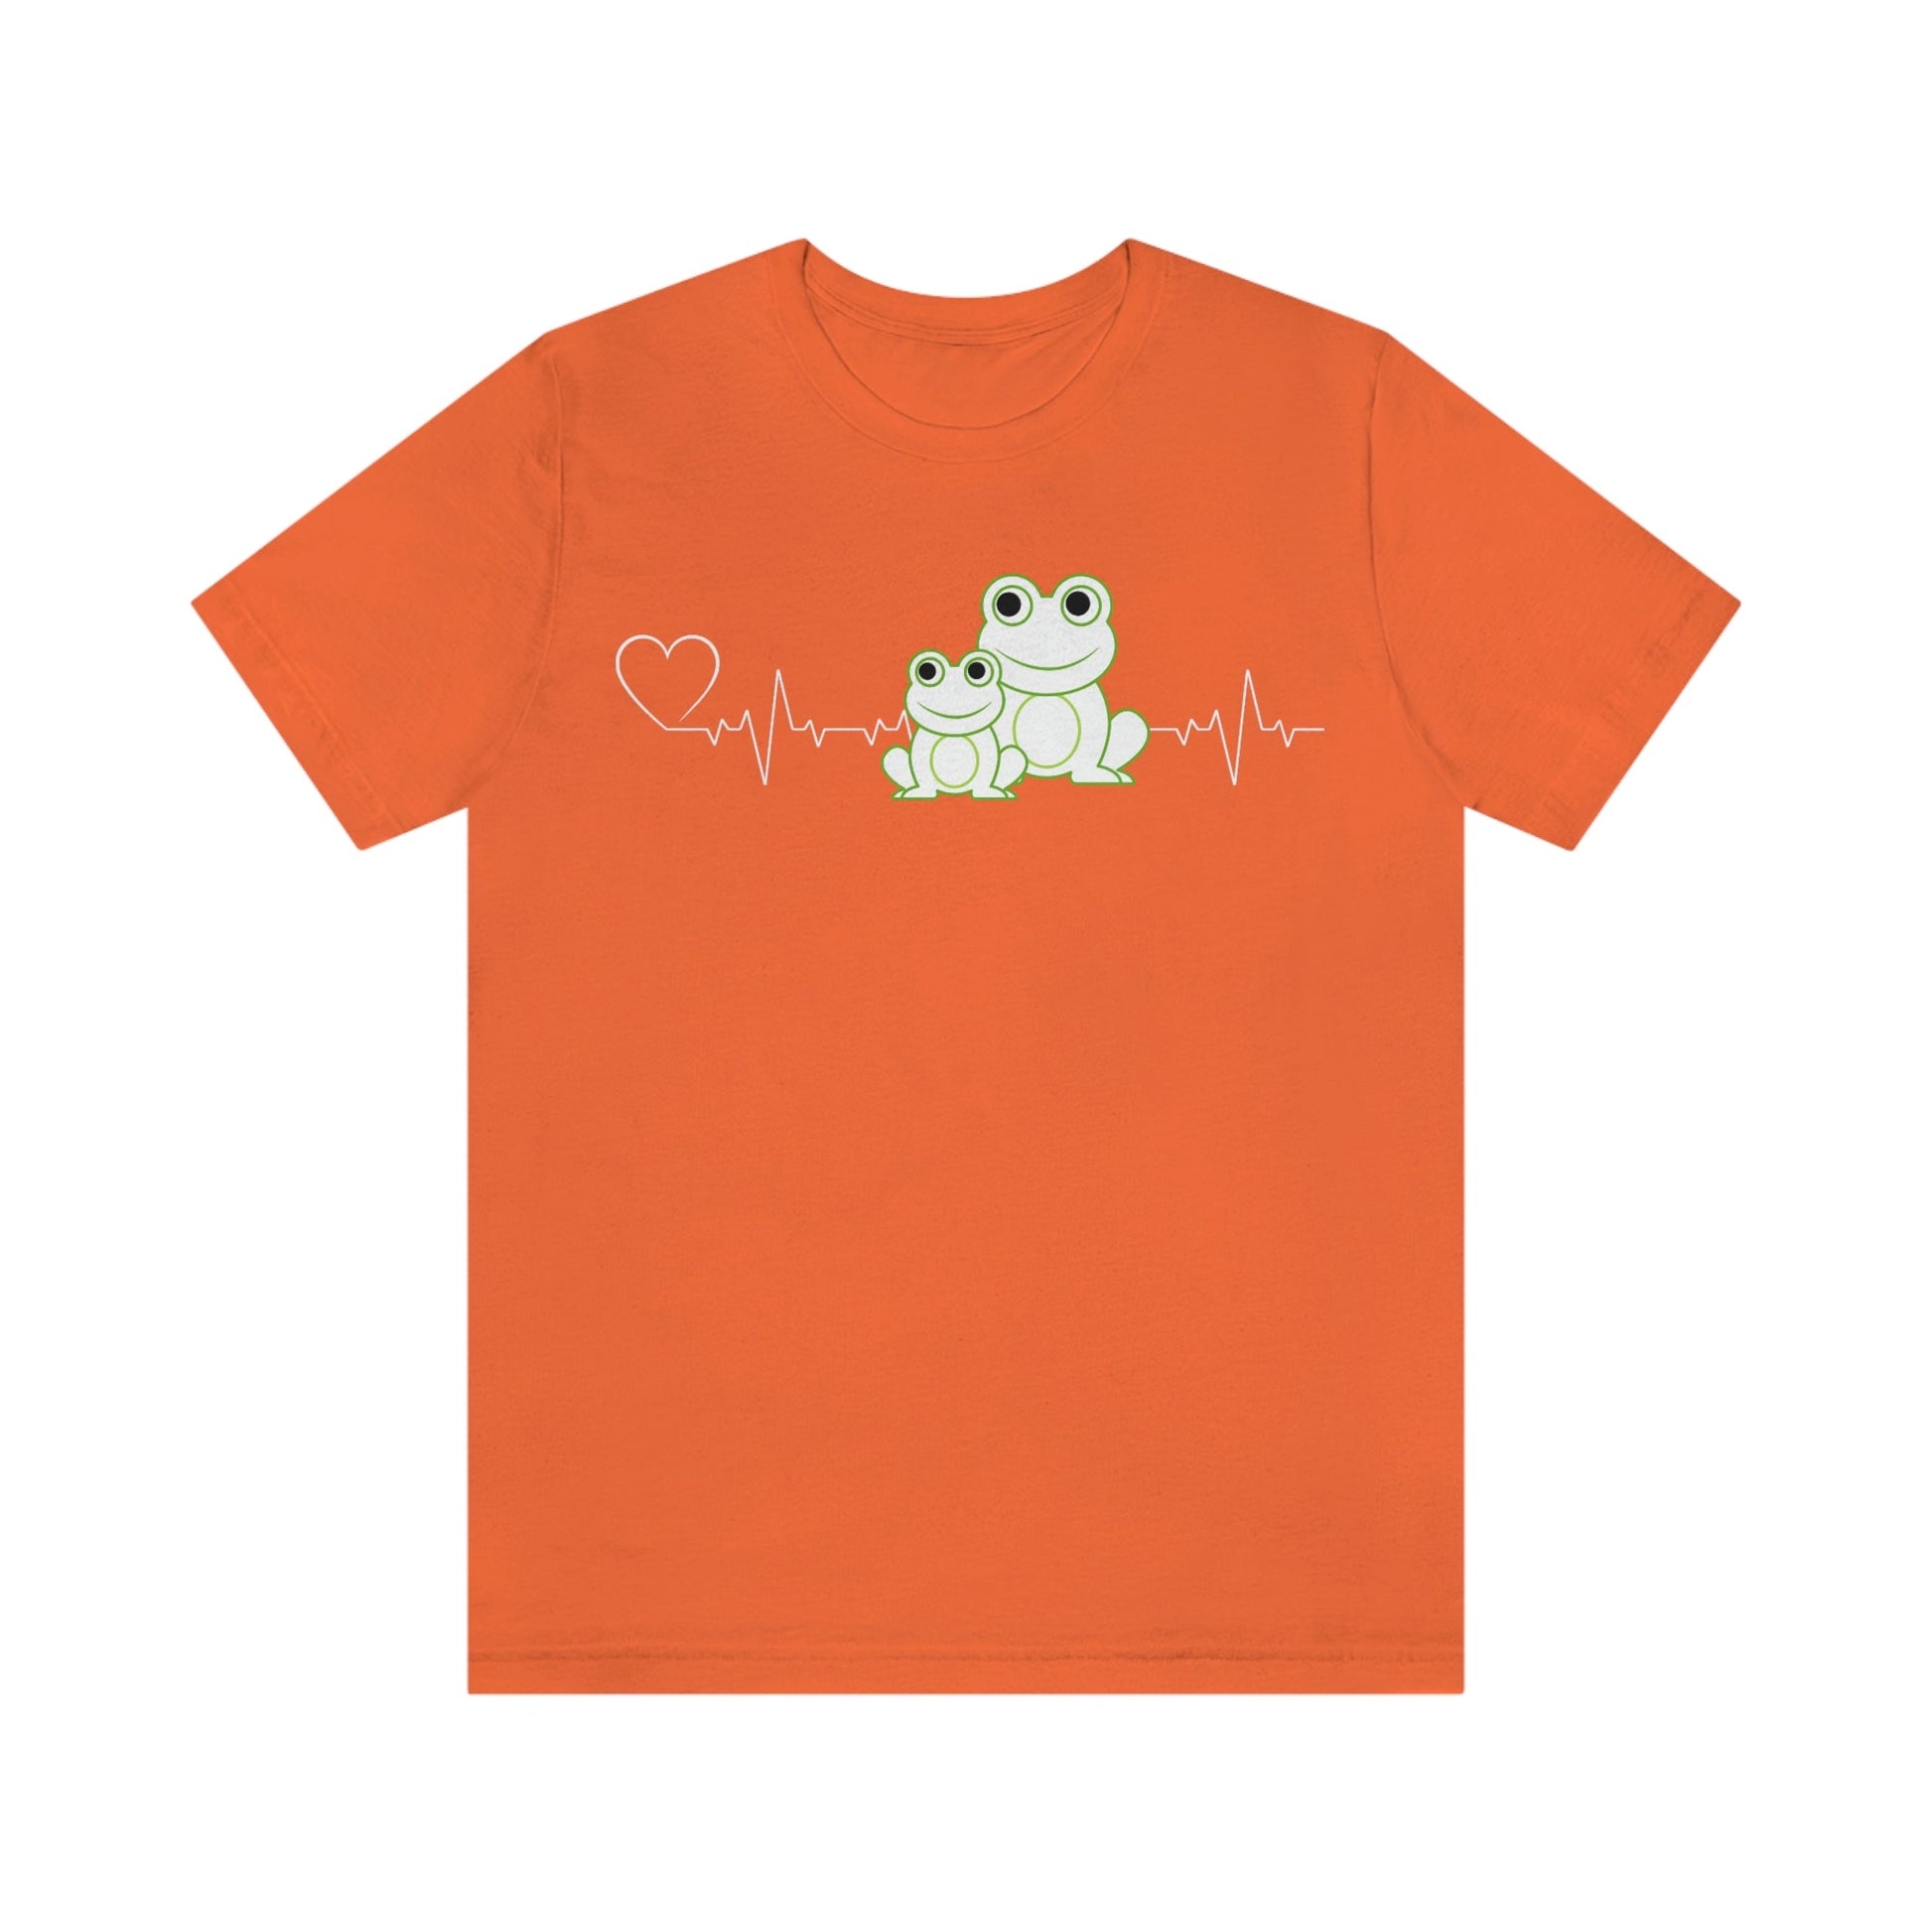 Heartbeat Mom & Baby Frogs Graphic T-Shirt-T-Shirt-Orange-S-mysticalcherry